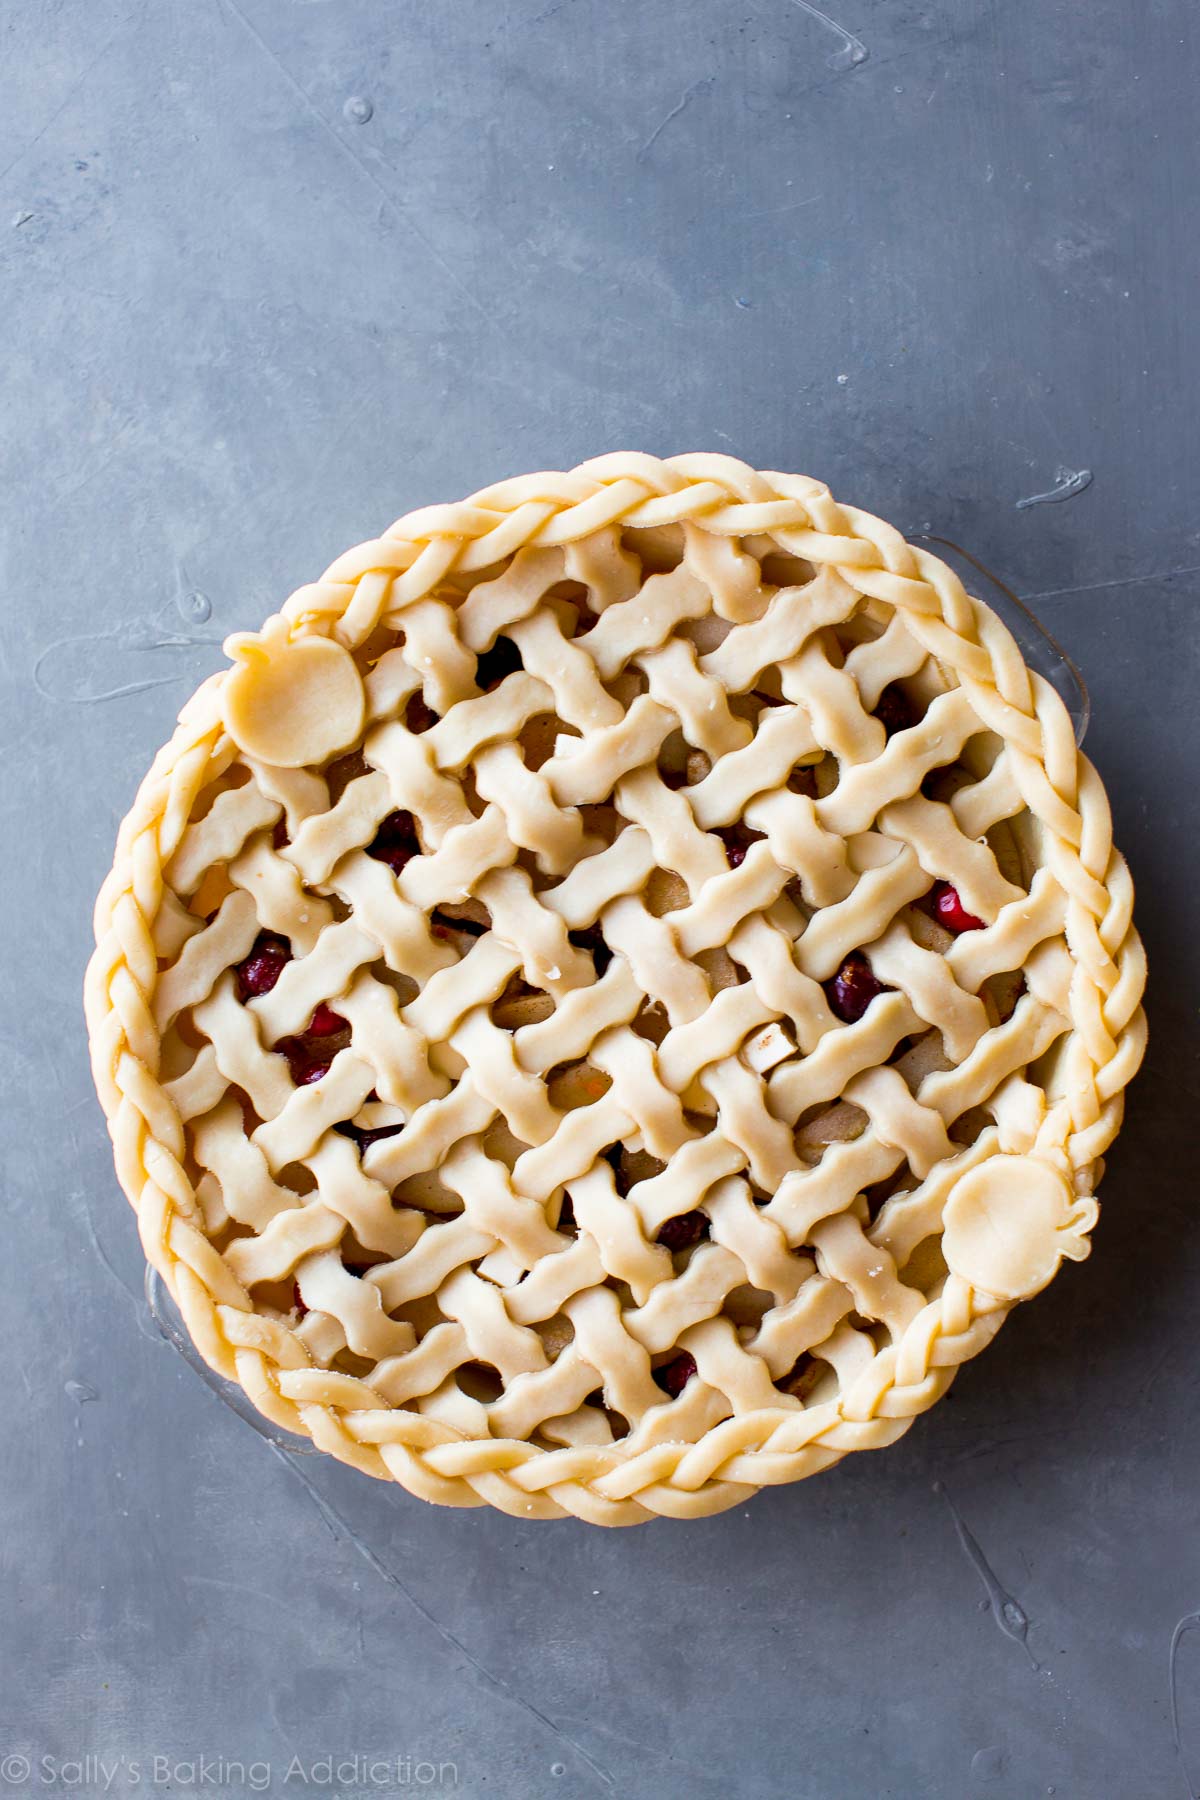 Inspiring pie crust designs sur sallysbakingaddiction.com